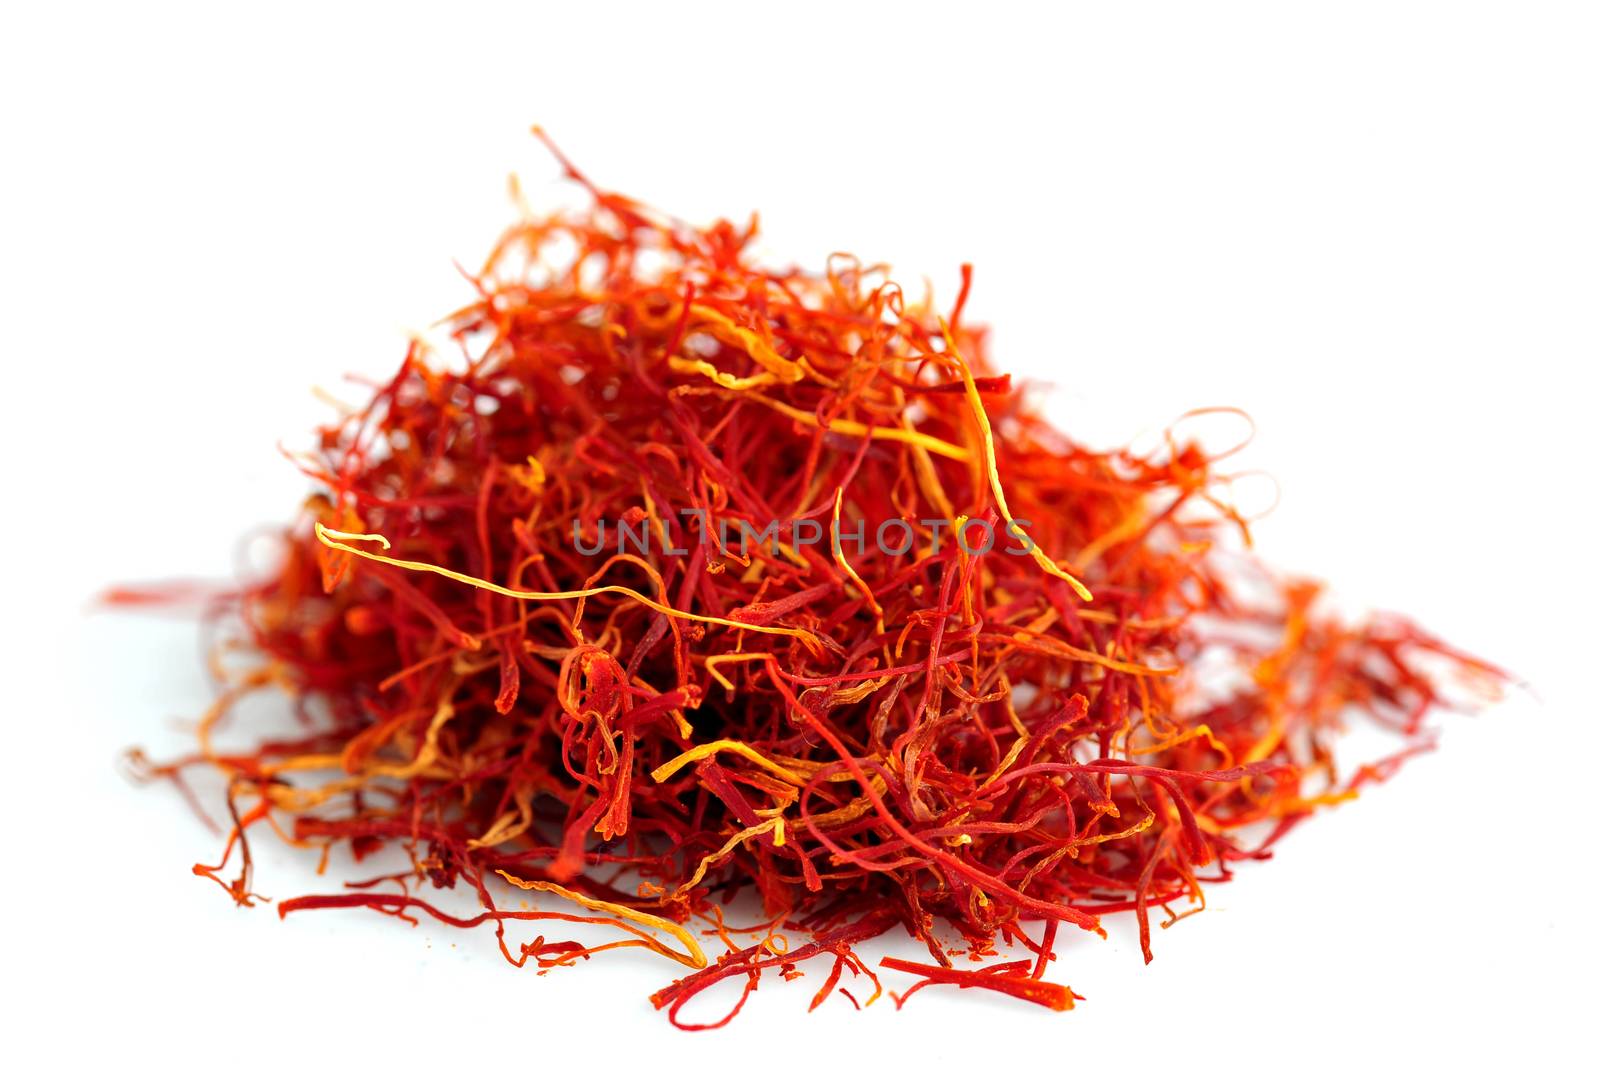 Isolated image of Saffron Spice on White Background